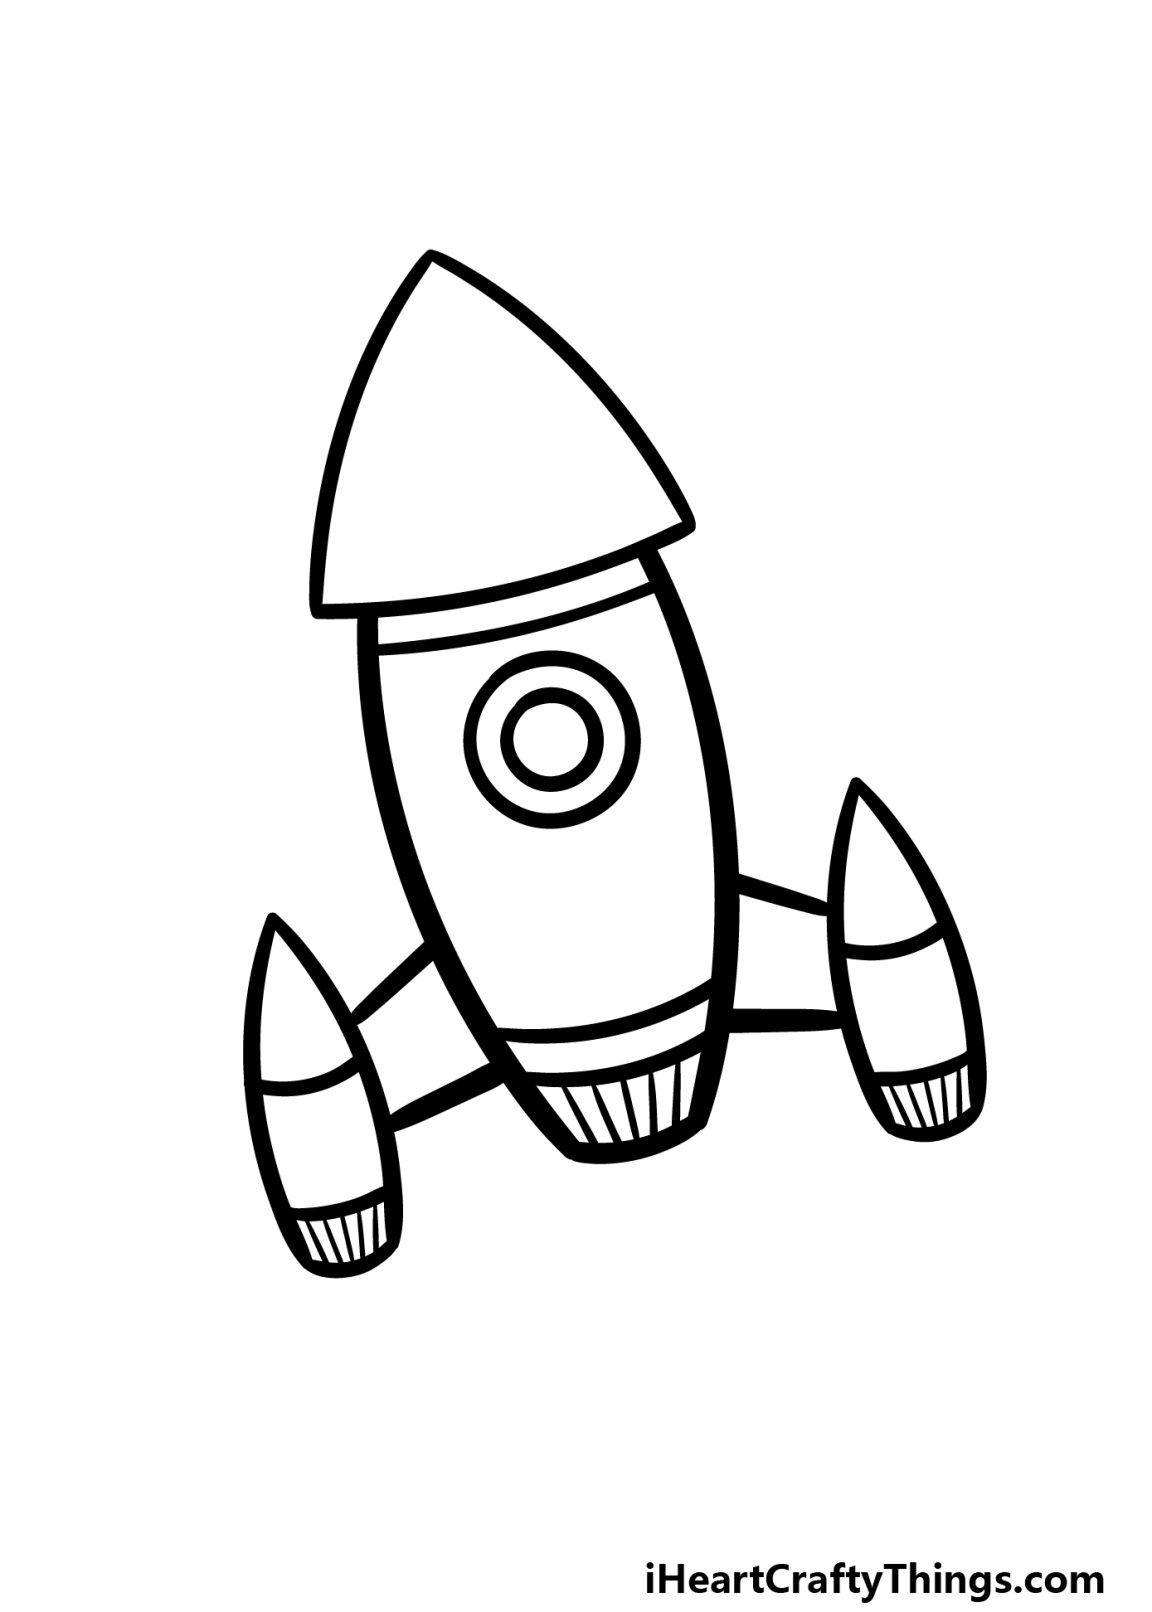 Cartoon Rocket Drawing How To Draw A Cartoon Rocket Step By Step